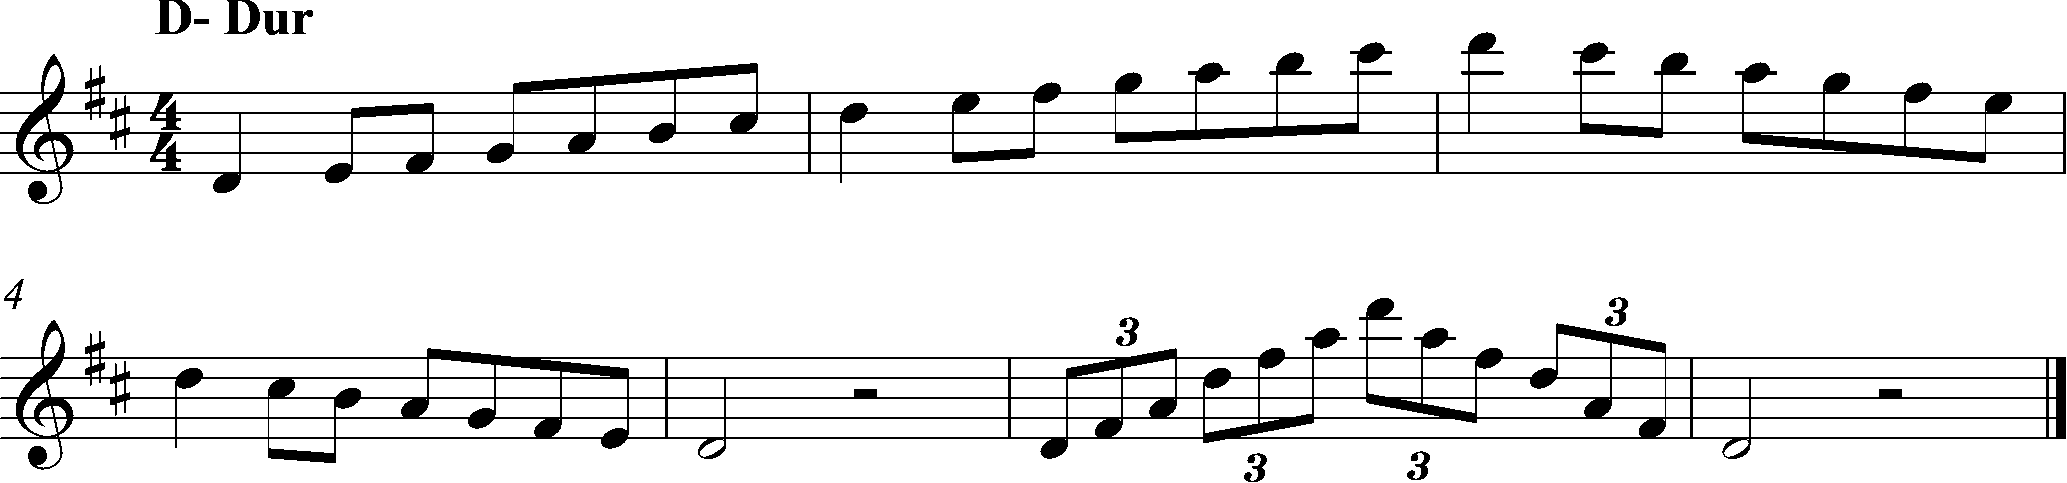 D-Dur, Tonleiter Klarinette